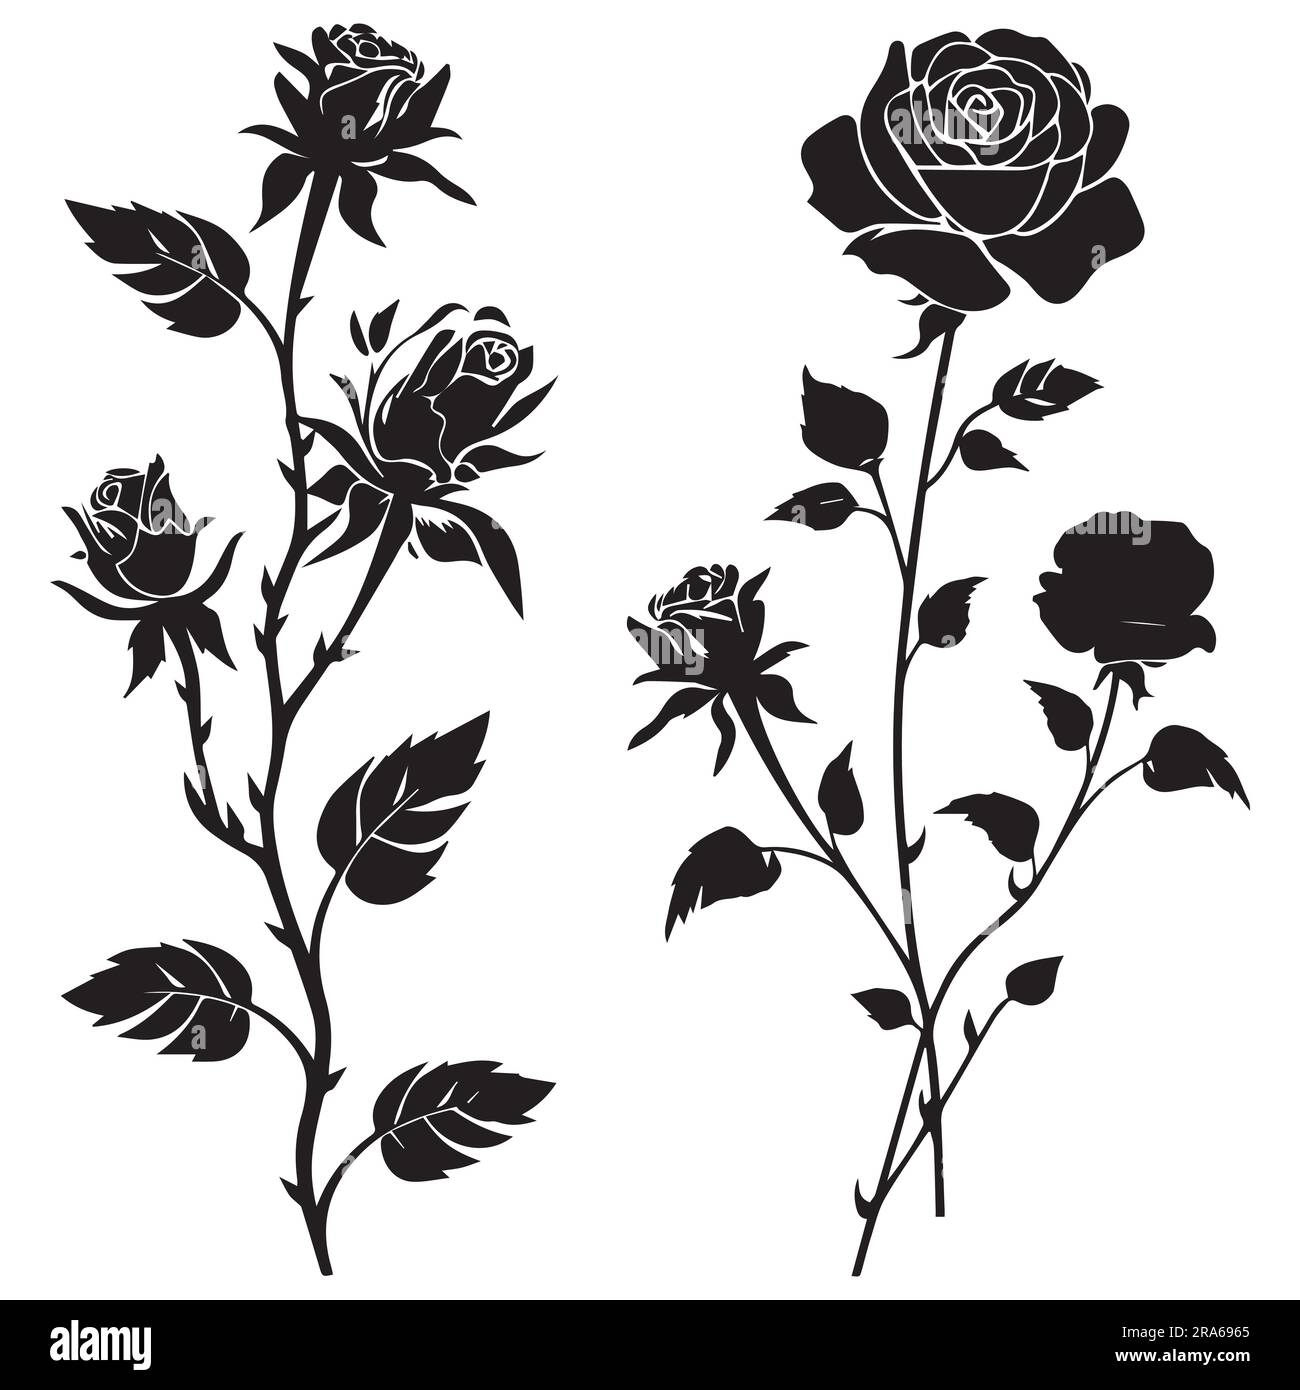 A set of silhouette Rose Flower Vector illustration Stock Vector